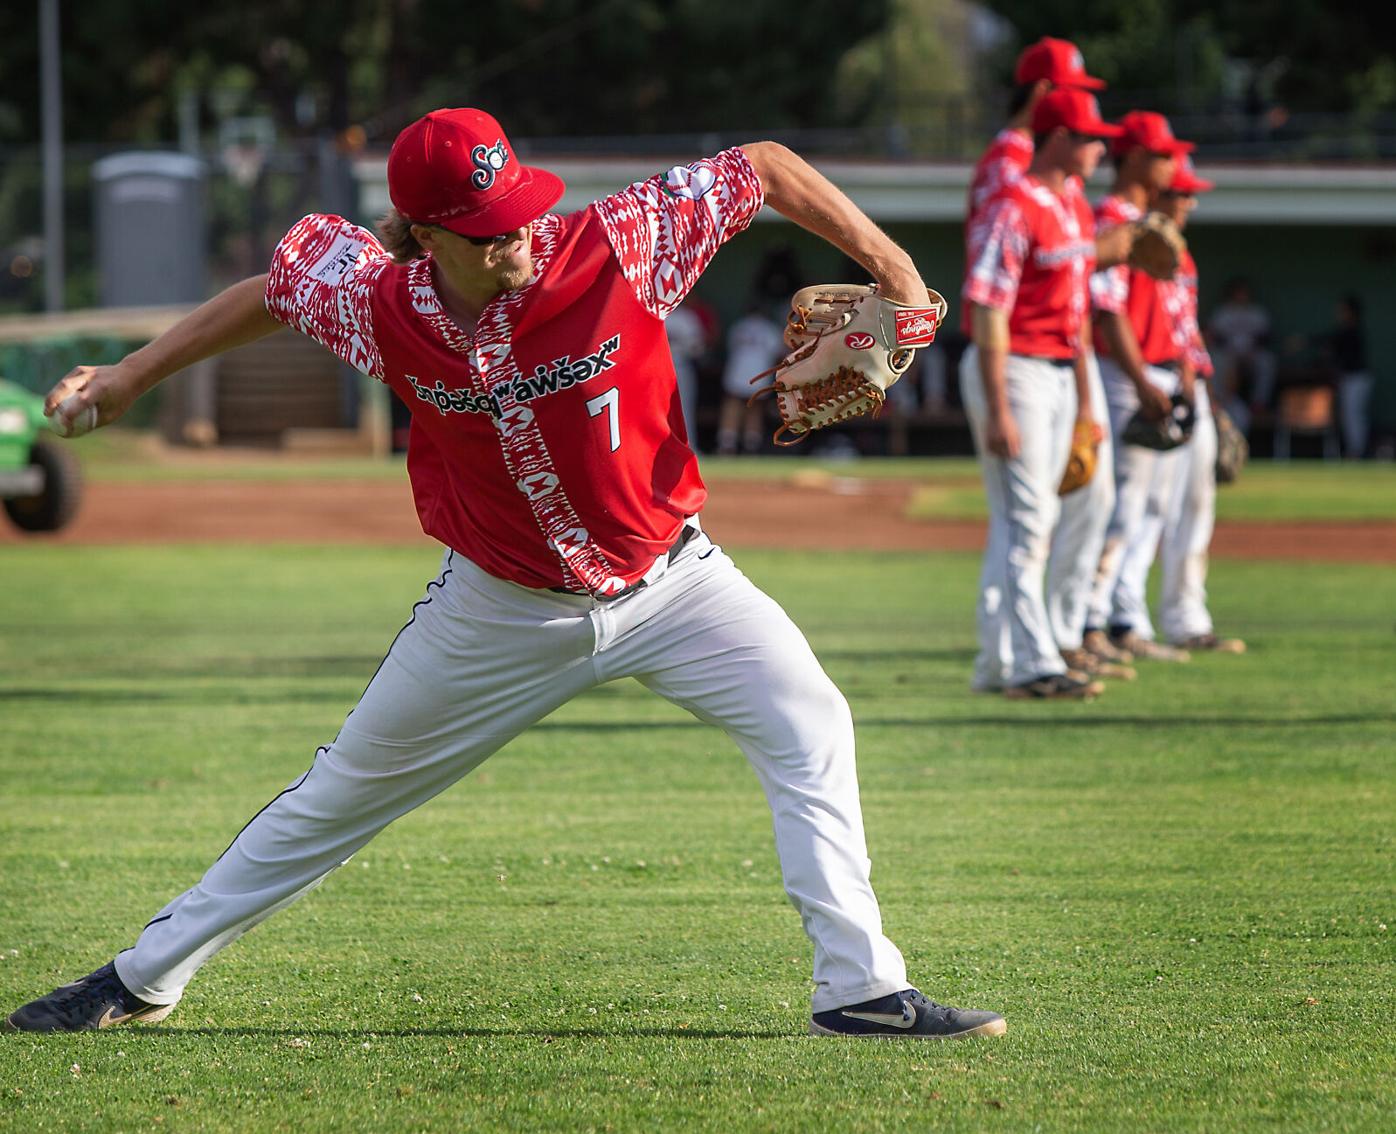 Spokane Indians baseball uniforms sport Salish word